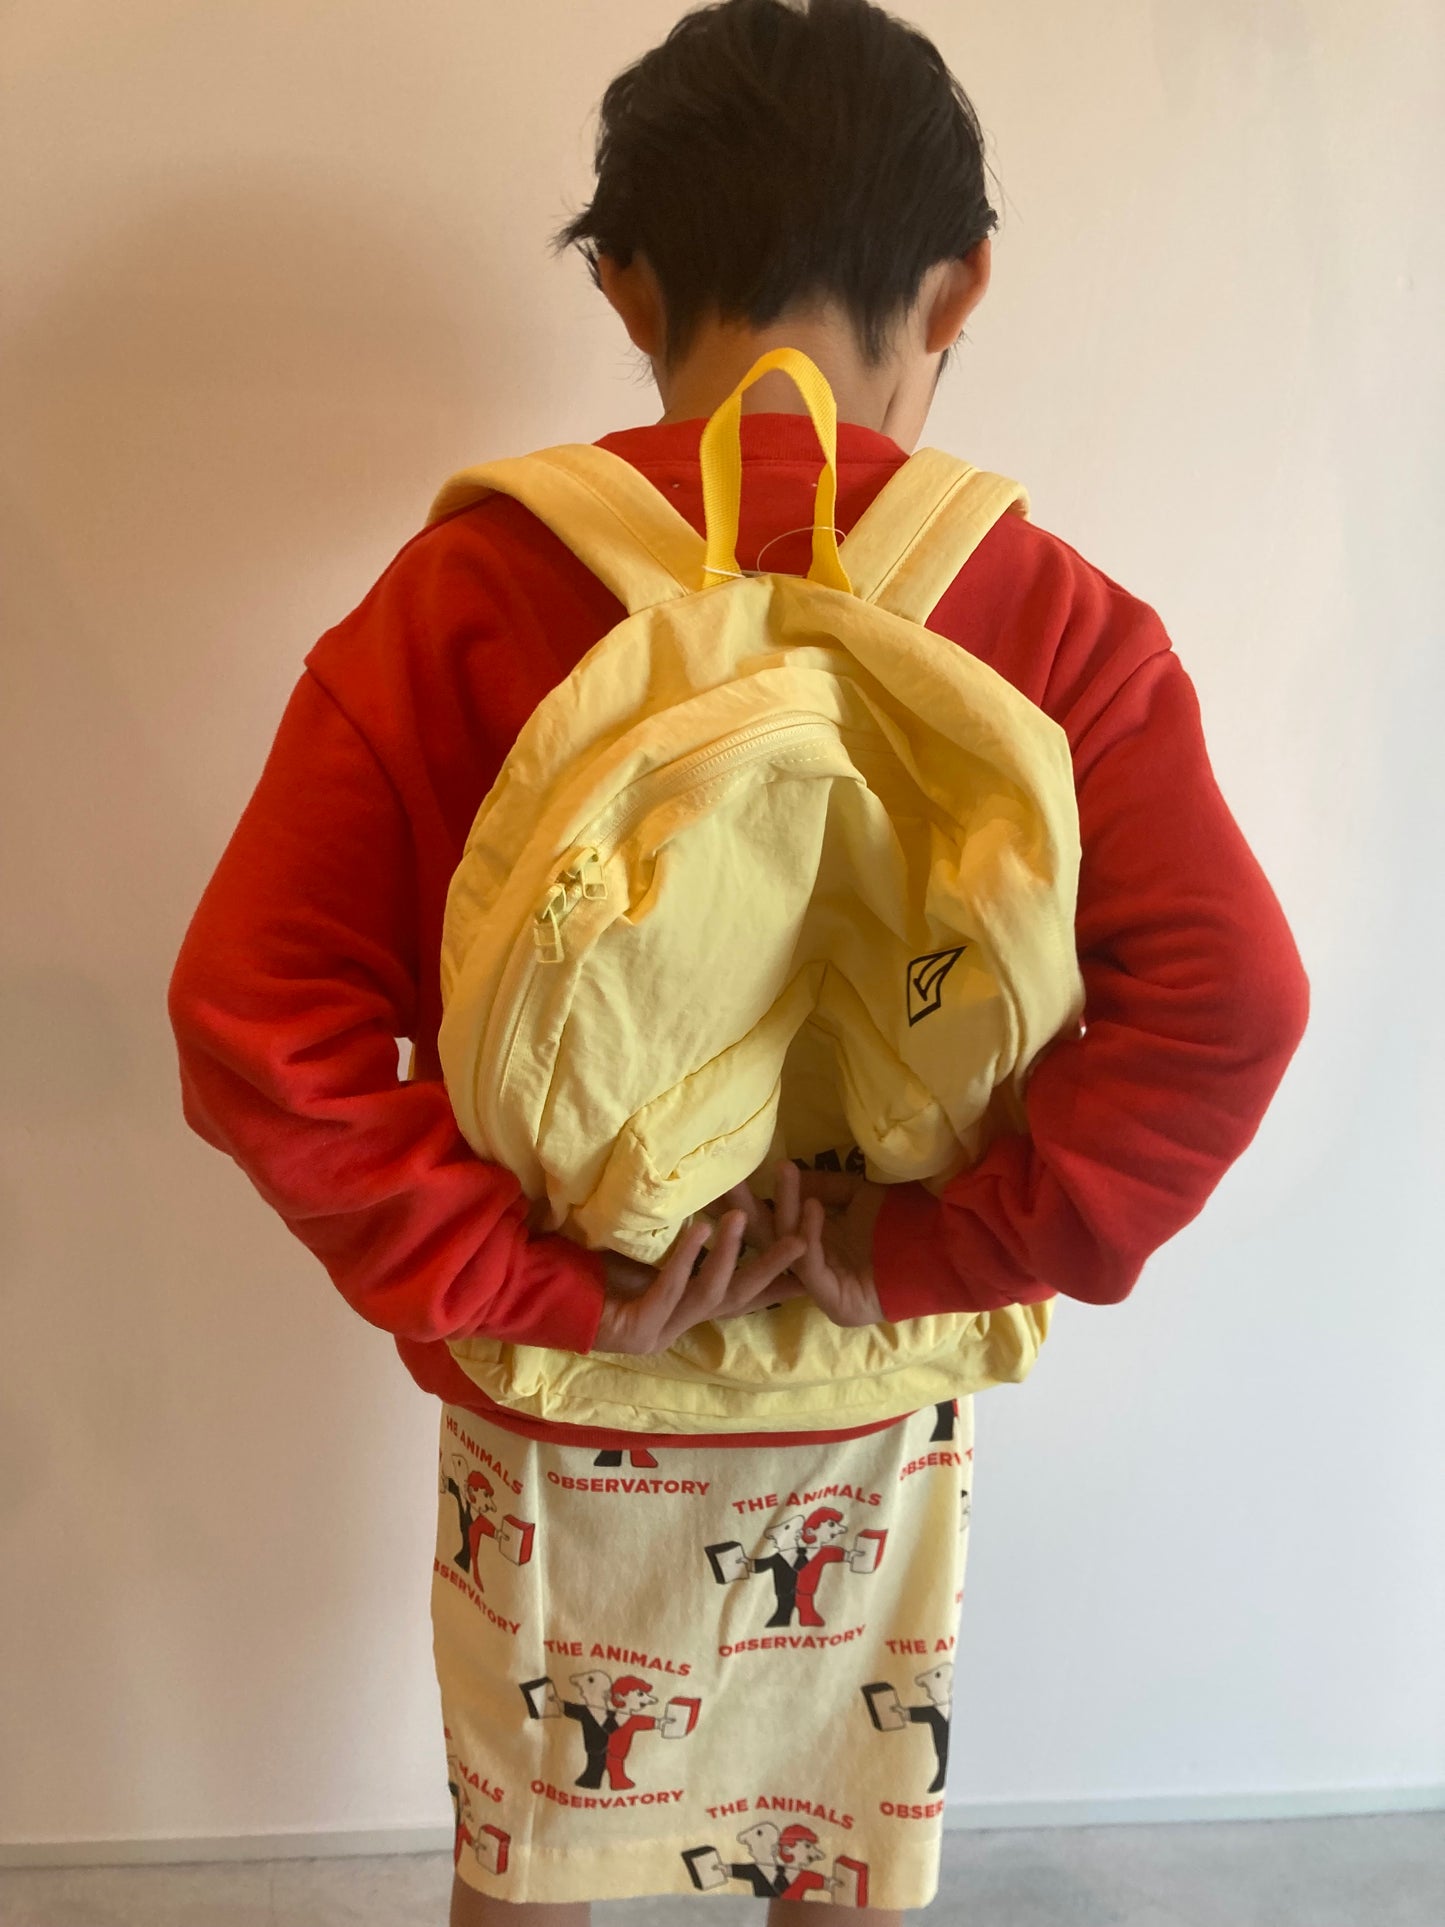 TAO / back pack soft yellow